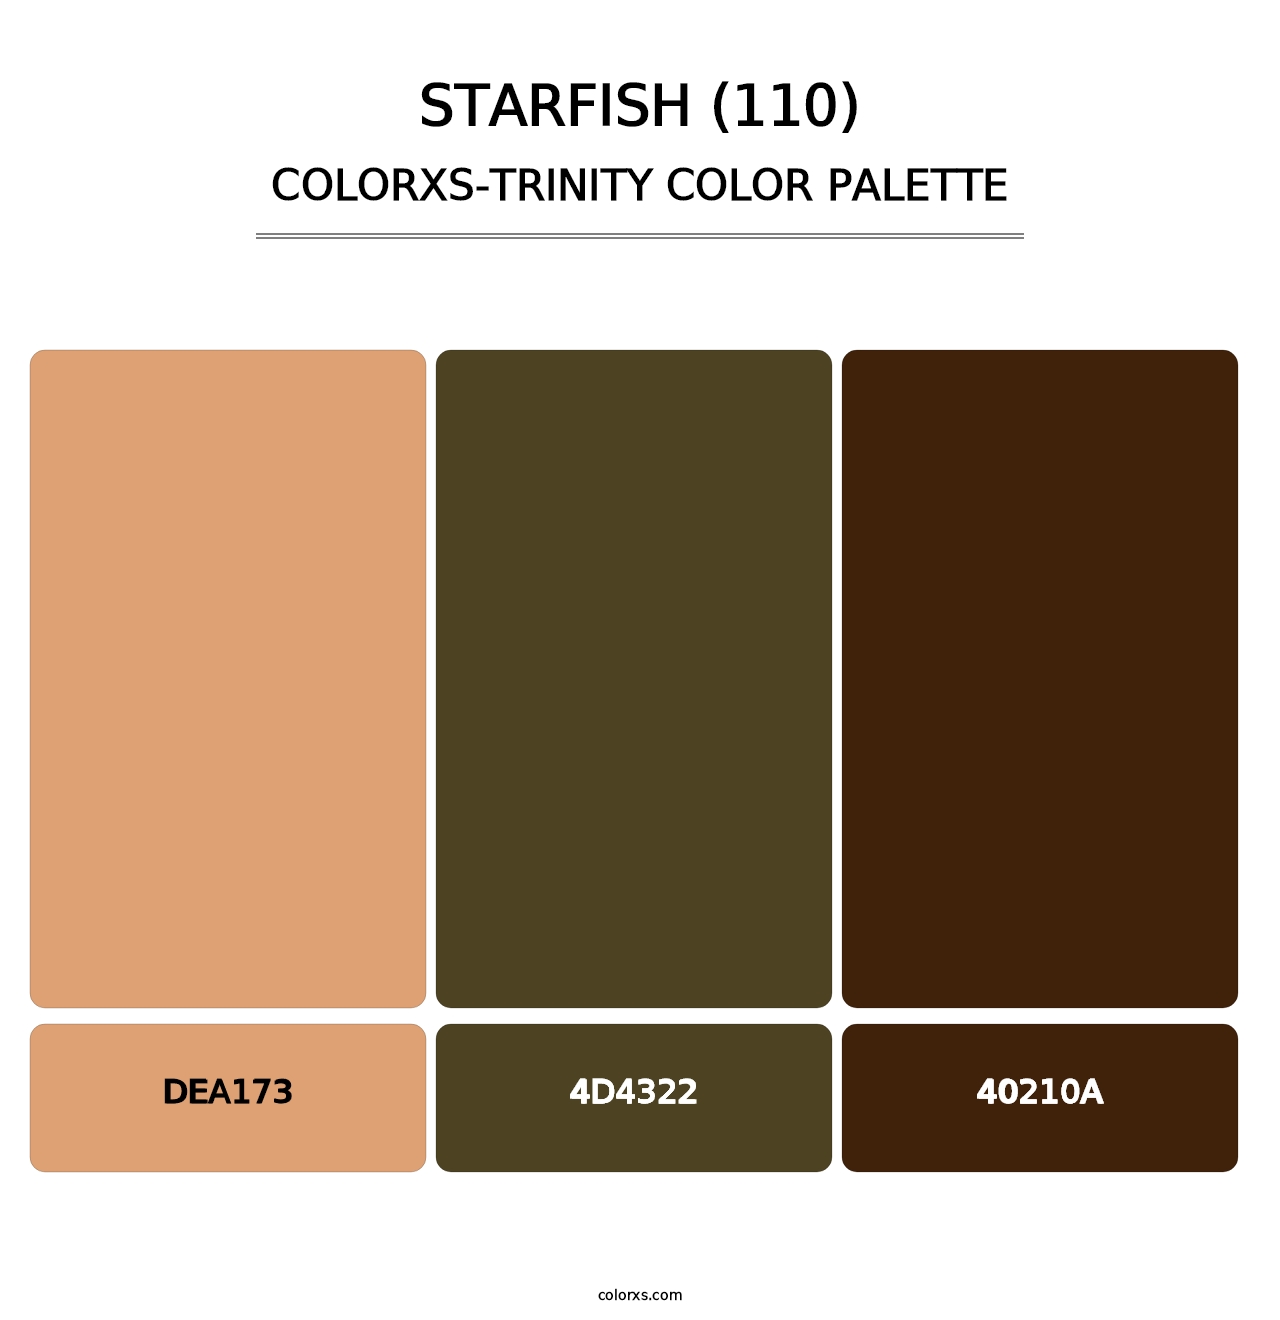 Starfish (110) - Colorxs Trinity Palette